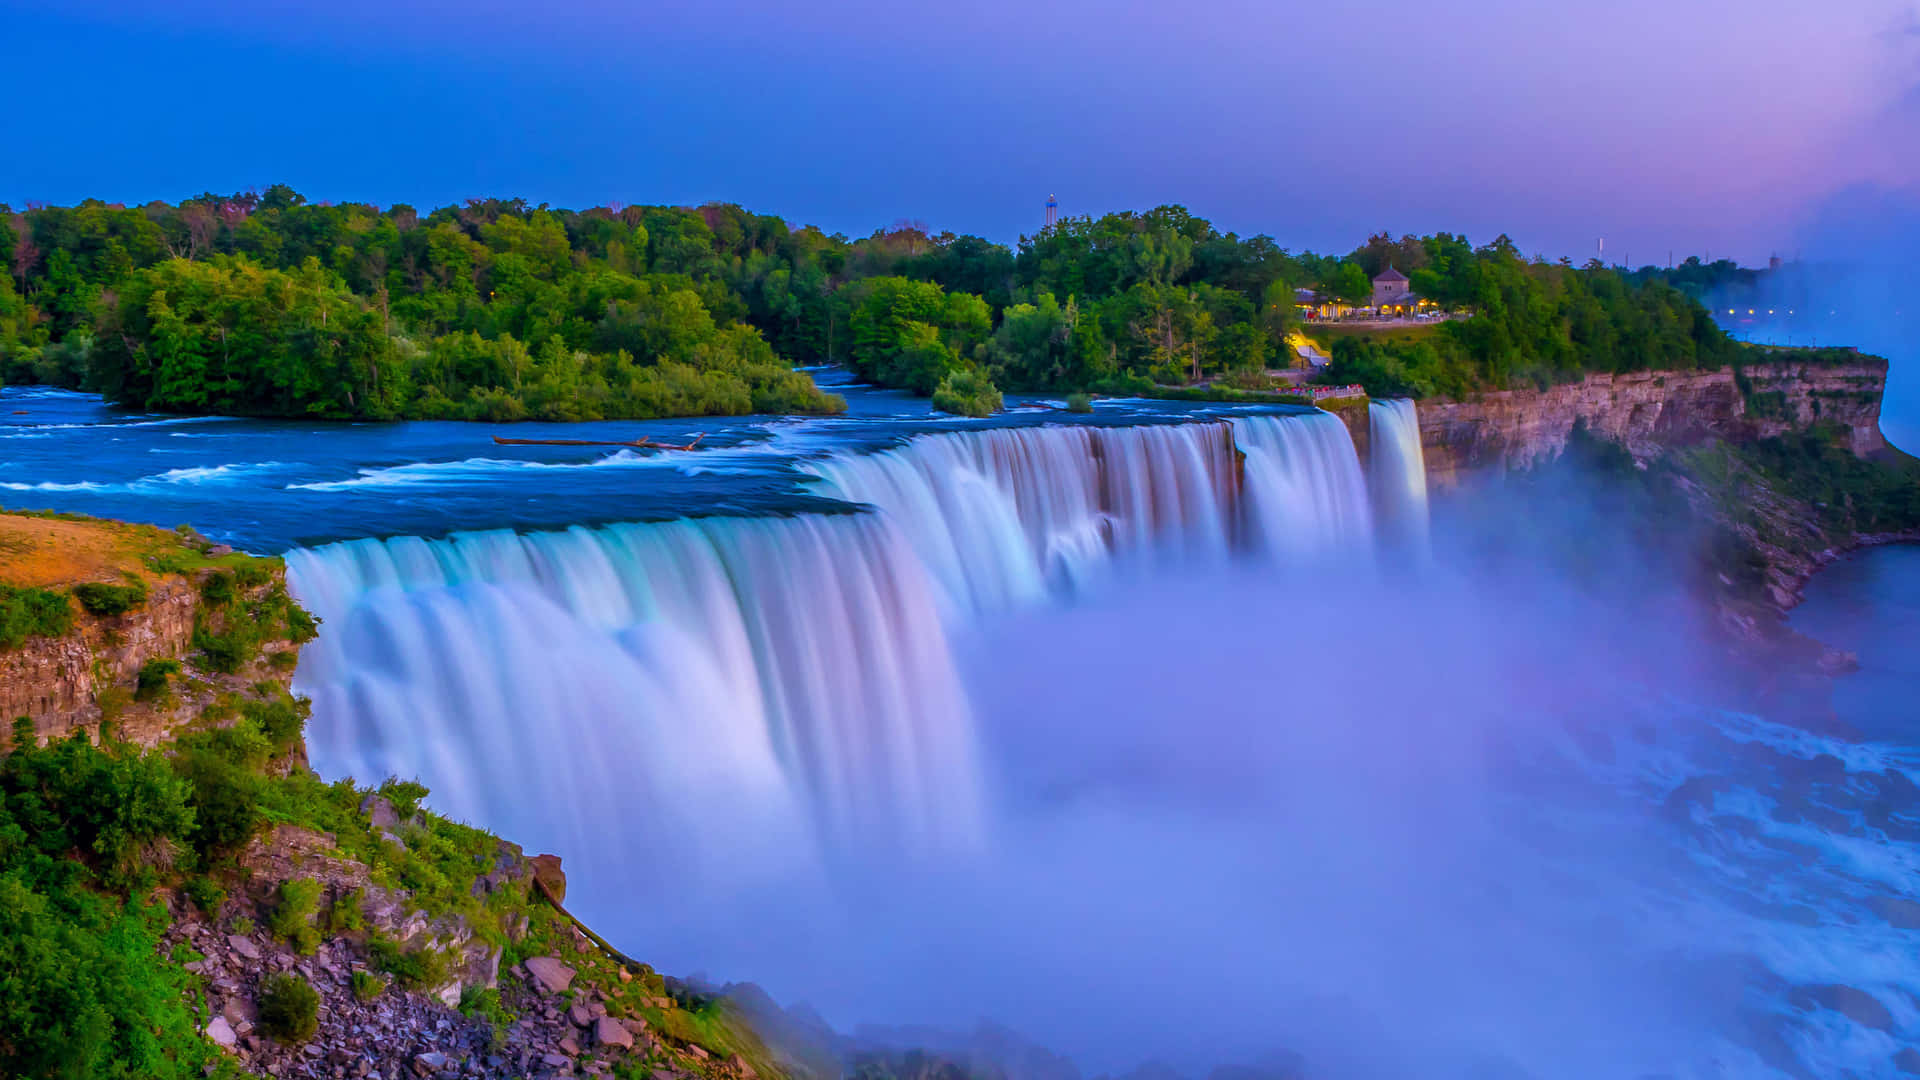 "The breathtaking power of Niagara Falls"